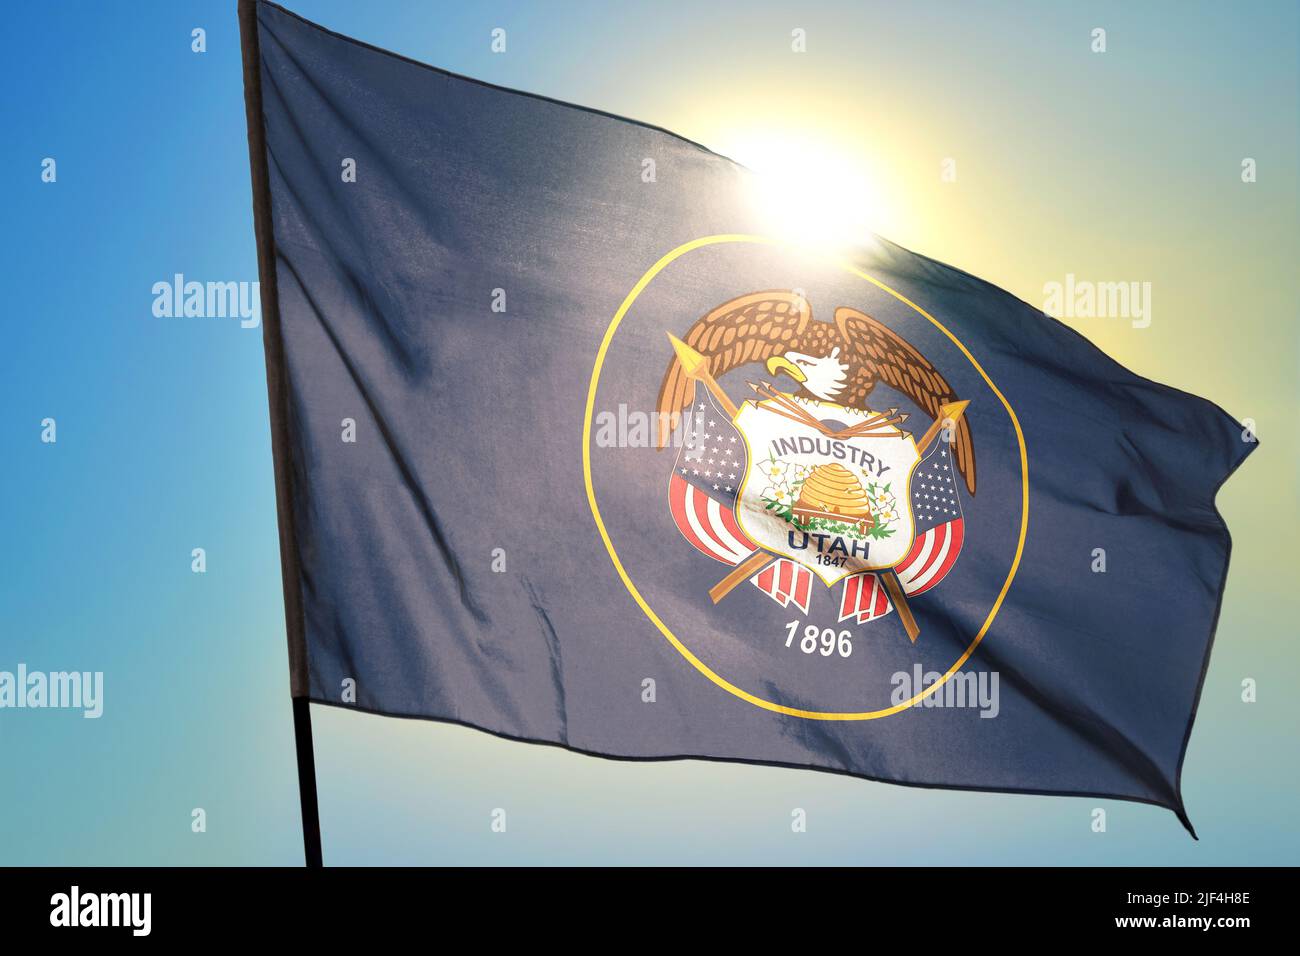 Utah state of United States flag waving on the wind Stock Photo